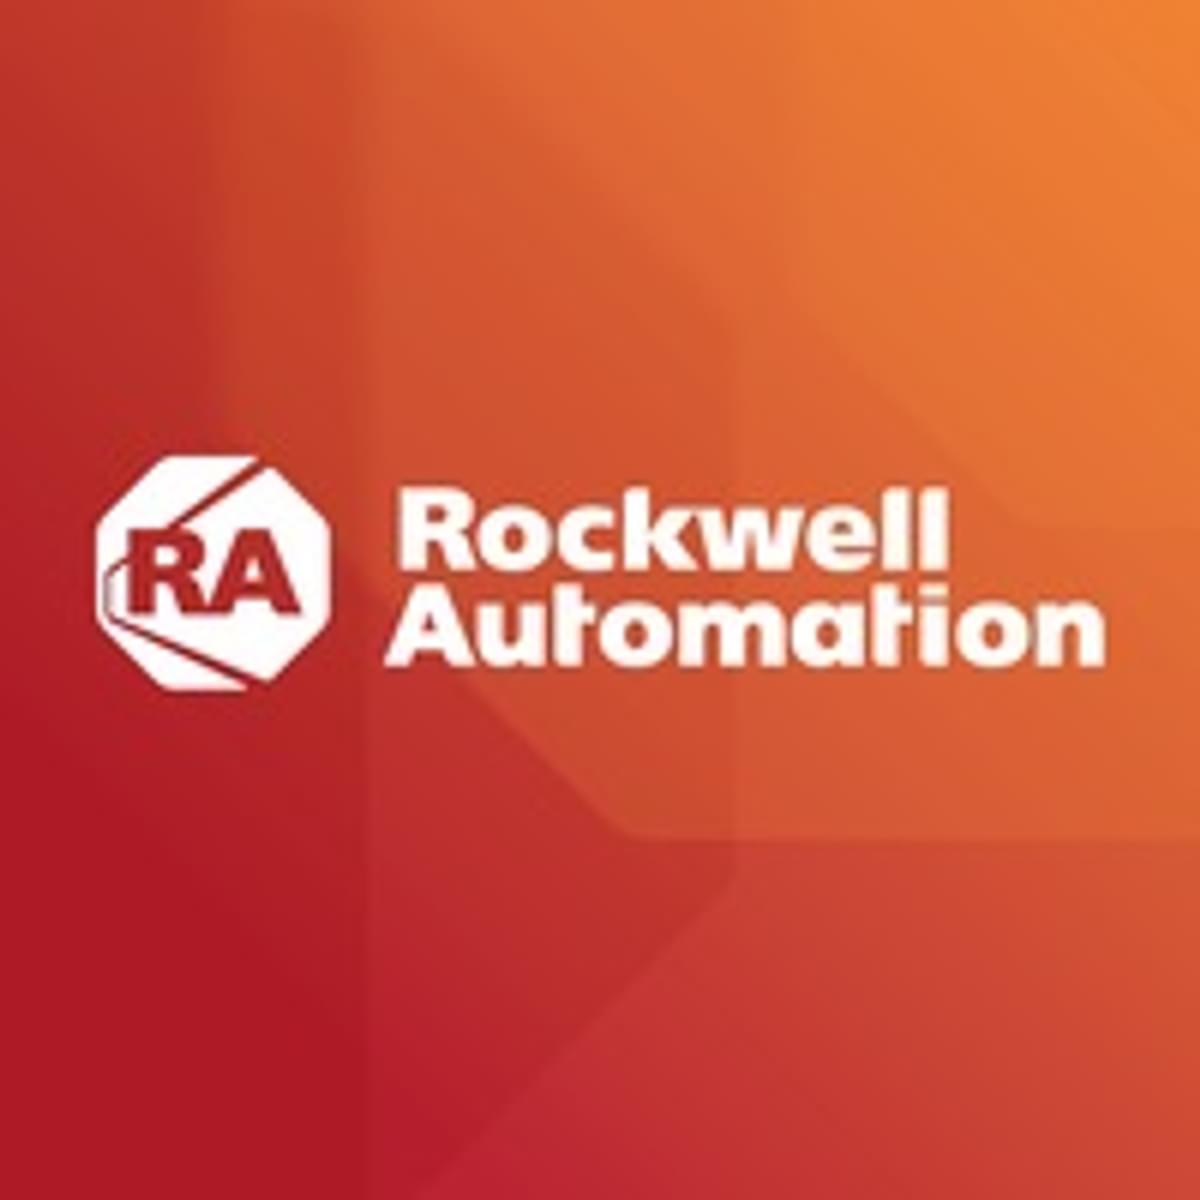 Rockwell Automation koopt AVATA image